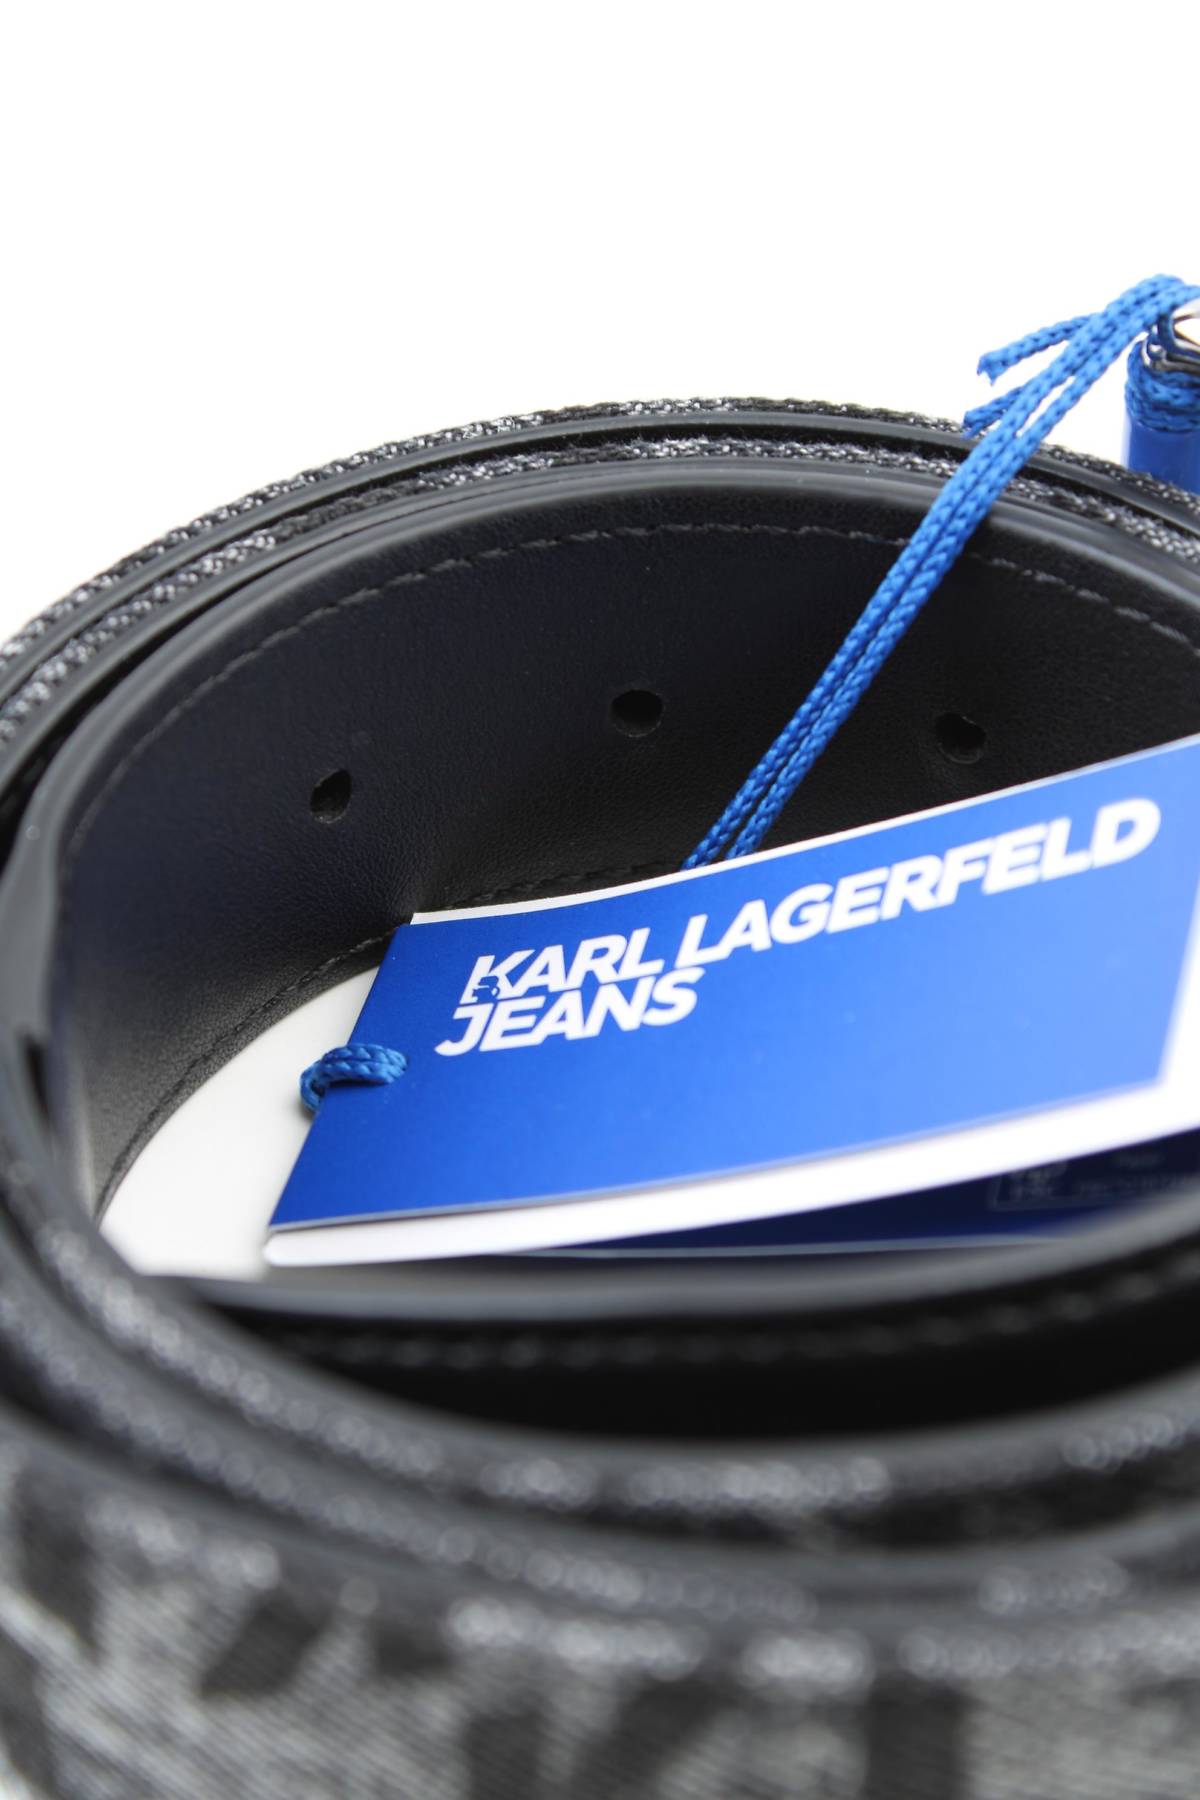 Колан Karl Lagerfeld Jeans3